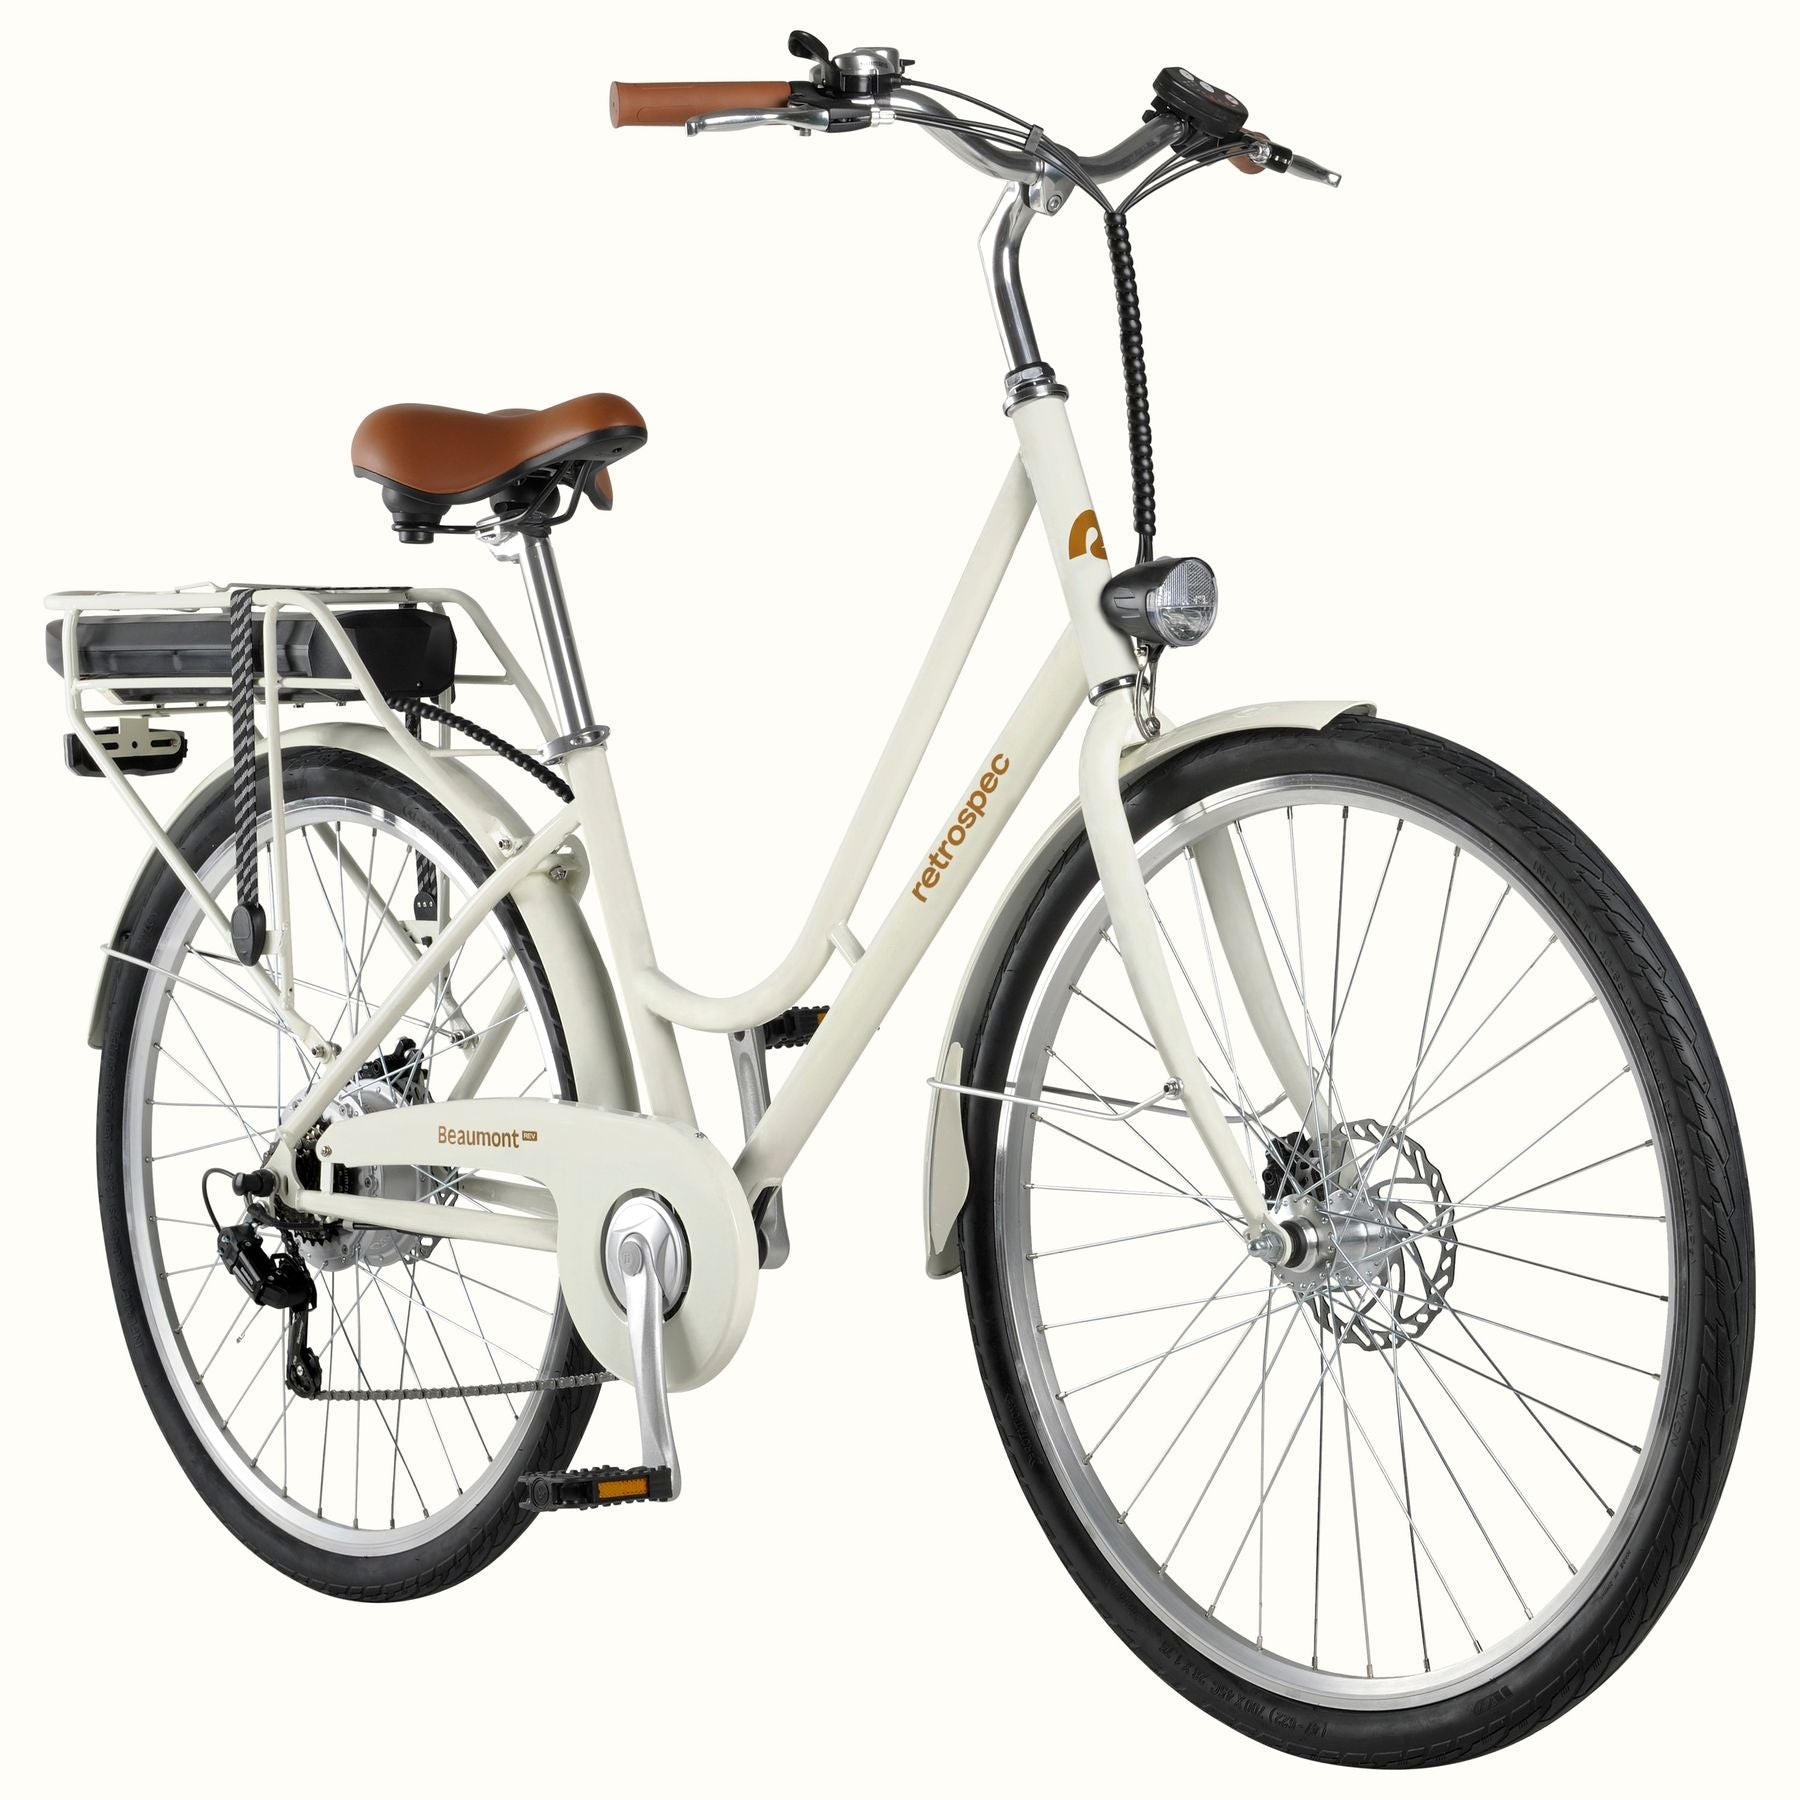 Beaumont Rev City Electric Bike (Step Through) - Eggshell